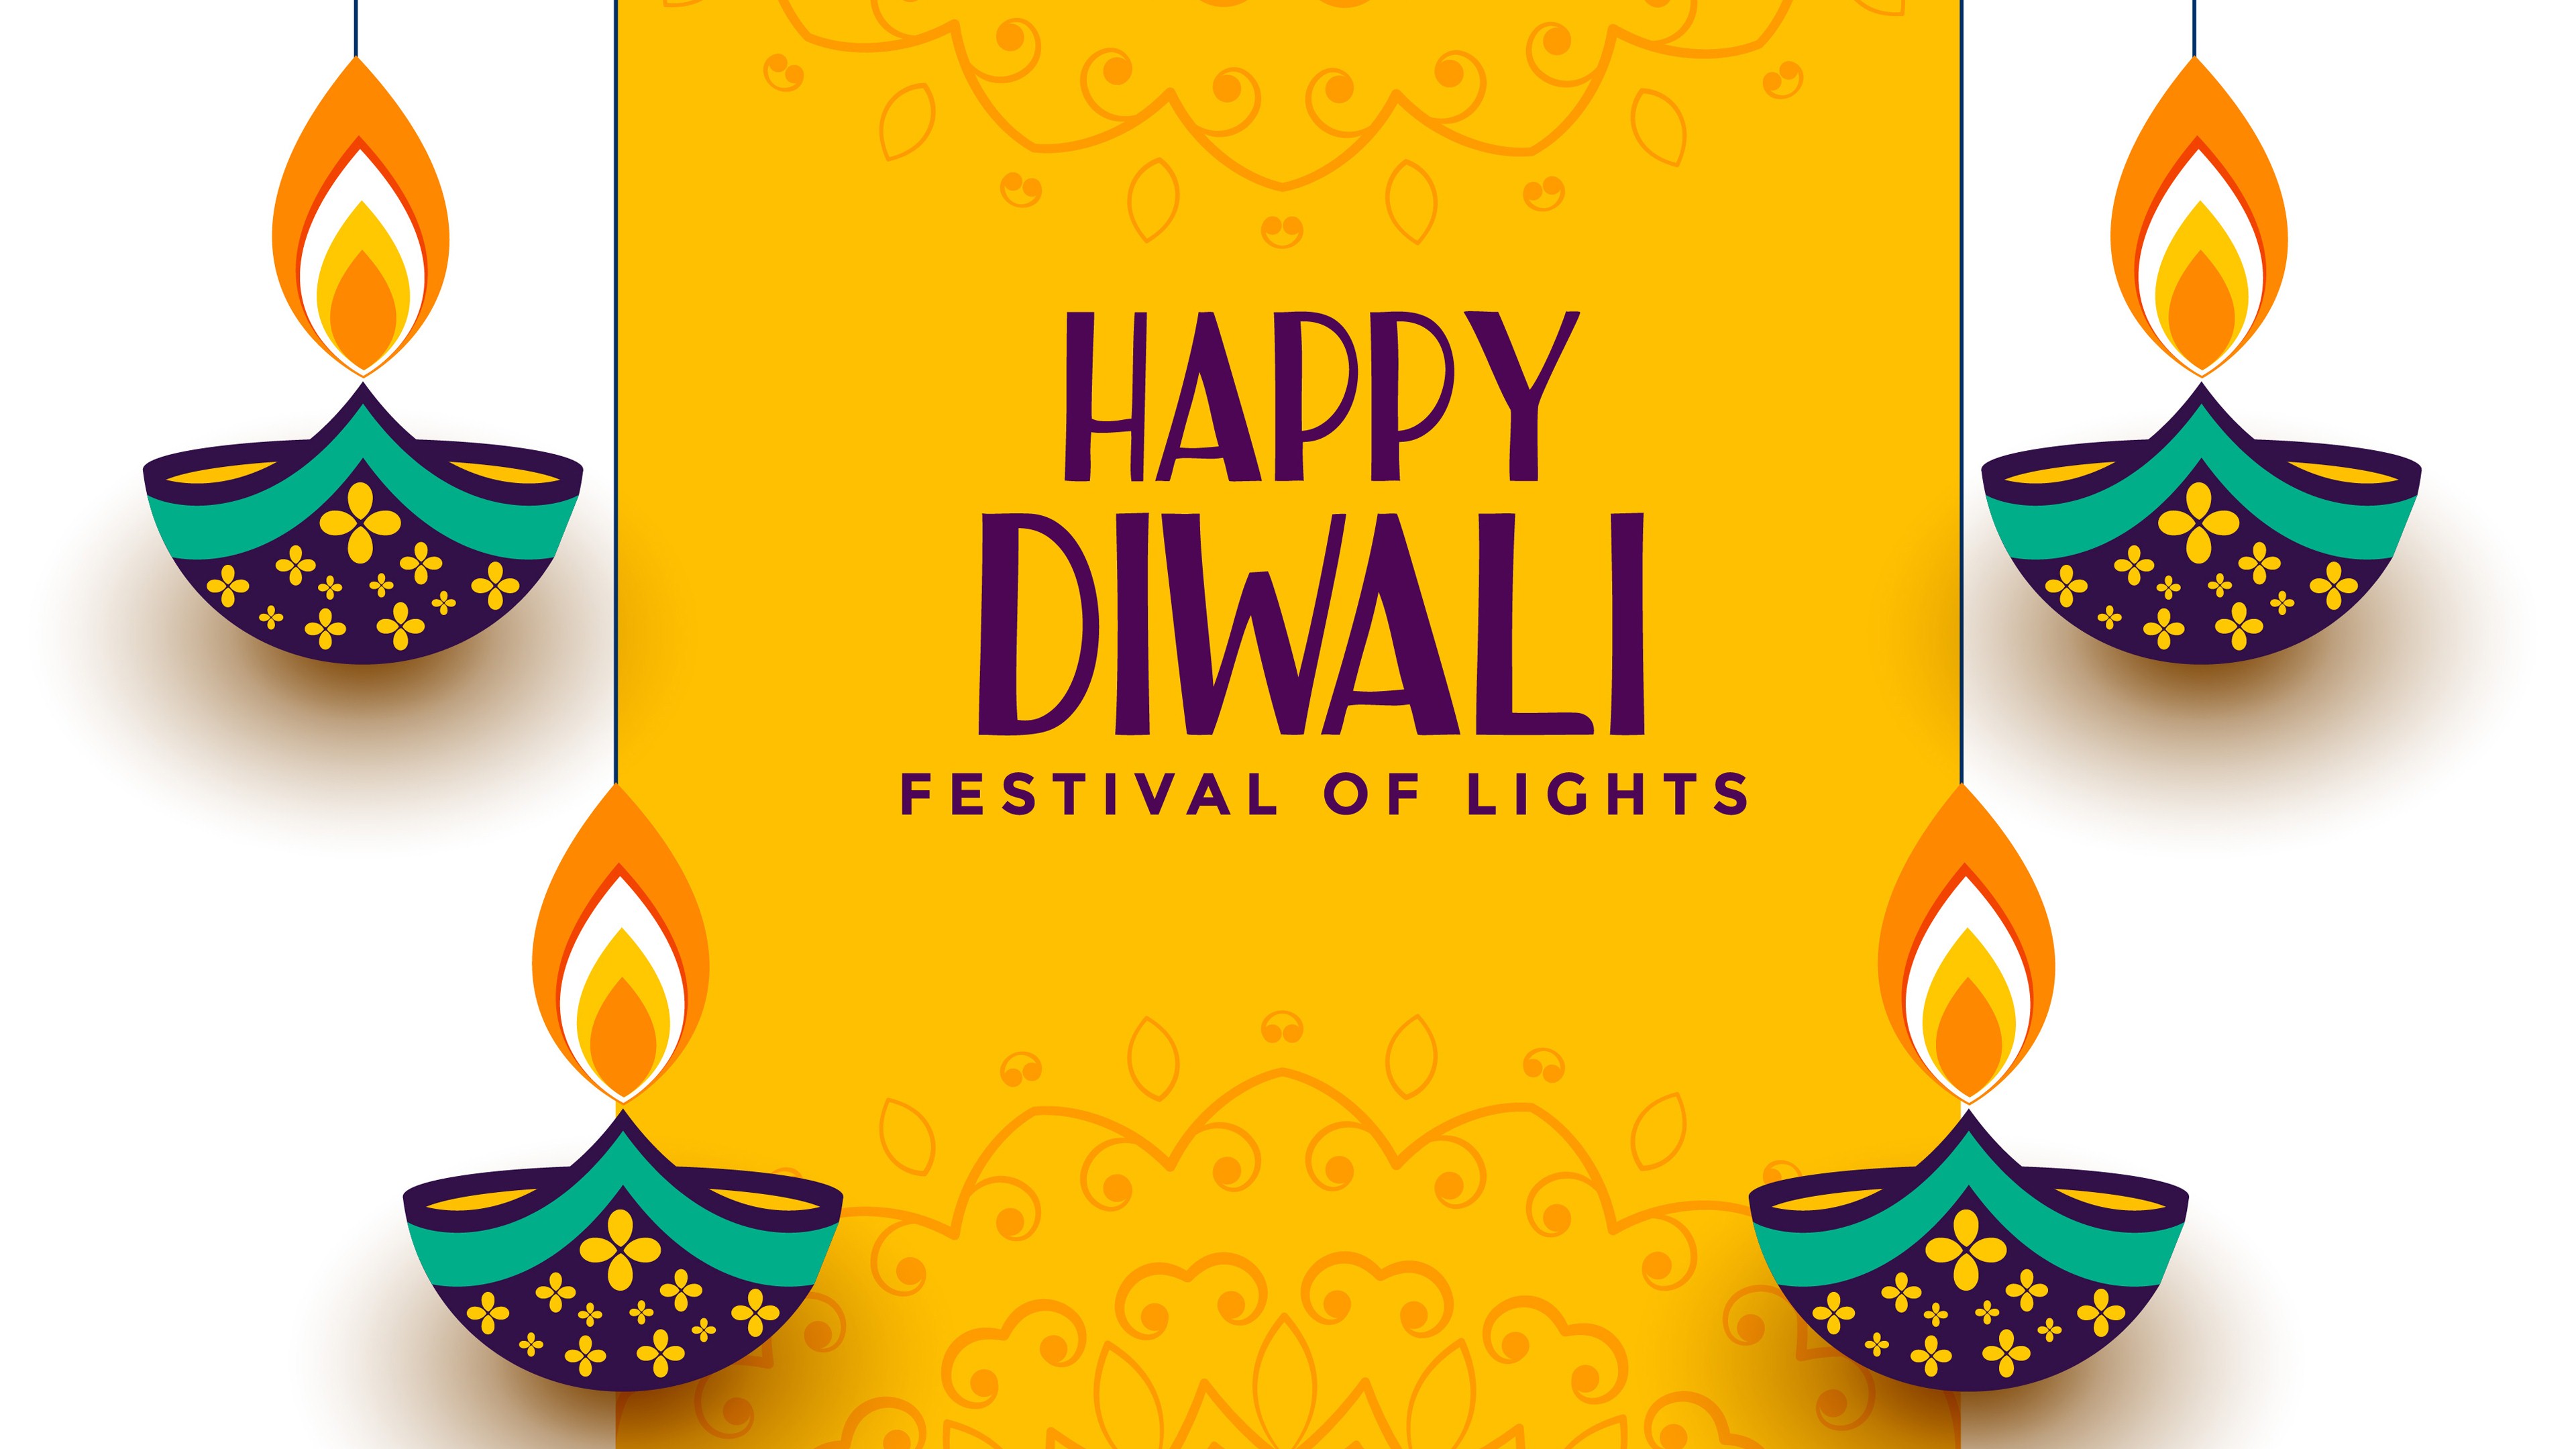 Festival Of Lights Diwali 2019 Yellow Background 4k - Diwali Festival Of Lights 2019 - HD Wallpaper 